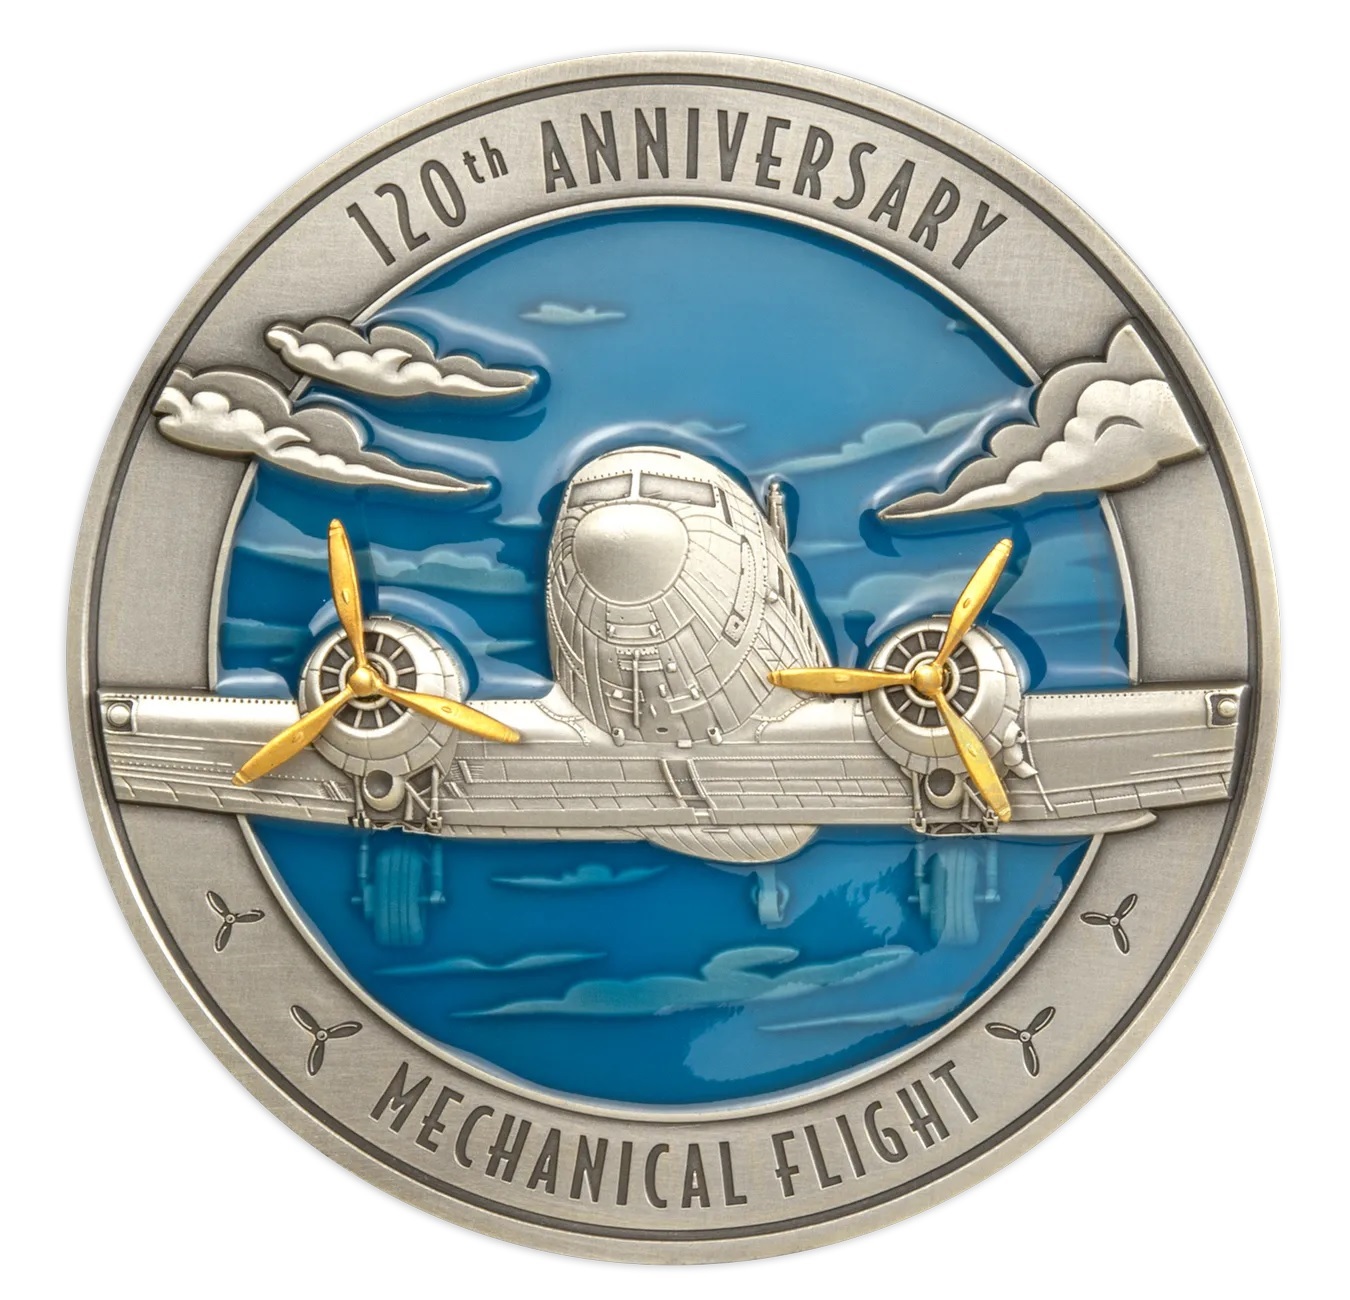 (W022.10.D.2023.500.g.Ag.1) 10 Dollars Barbados 2023 500 grams Antique silver - Mechanical flight Reverse (zoom)